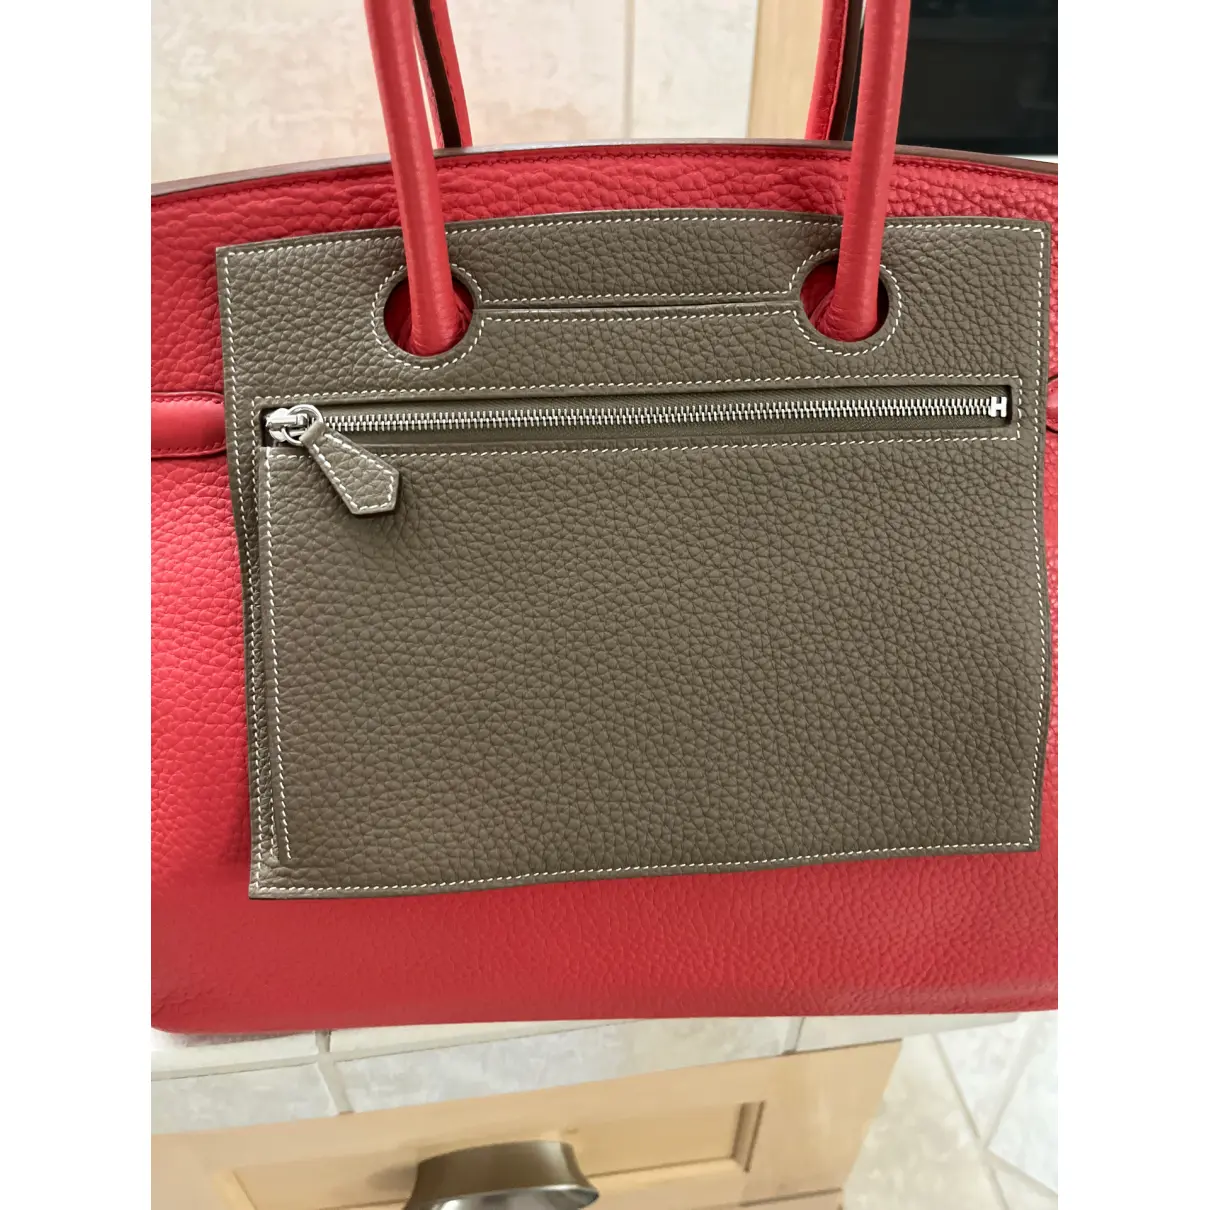 Leather purse Hermès